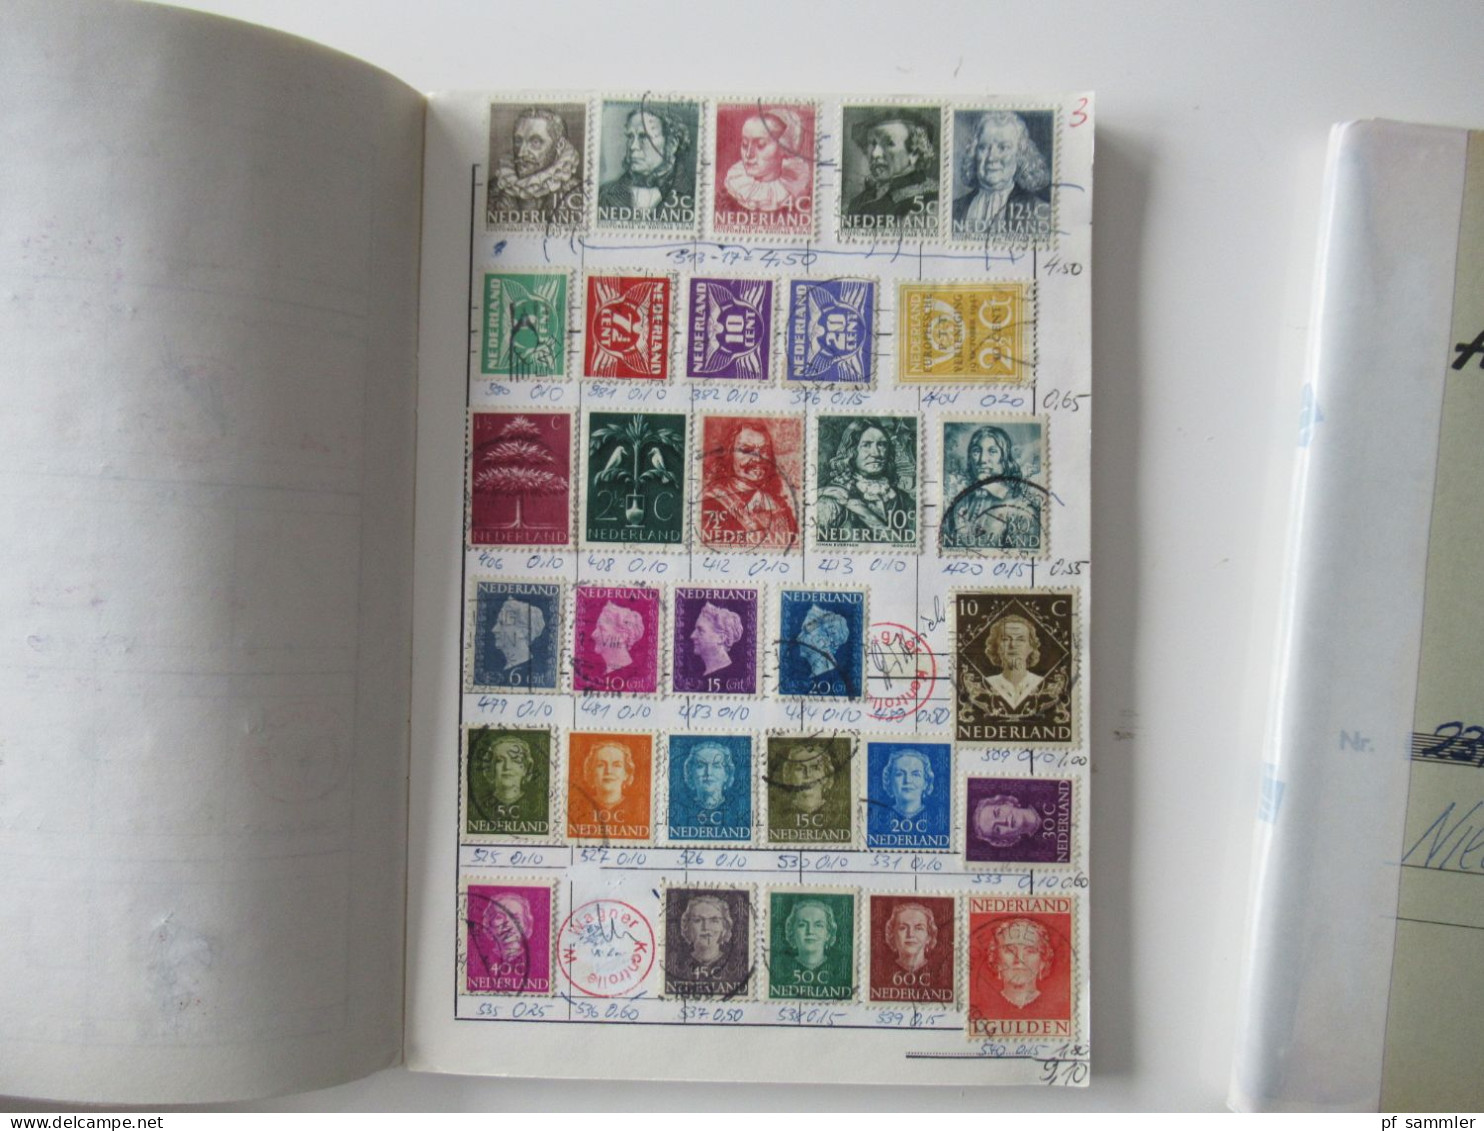 Sammlung / 2 Interessante Auswahlhefte Europa Niederlande Klassik - 1990 + Gebiete Viele Gestempelte Marken / Fundgrube - Colecciones (en álbumes)